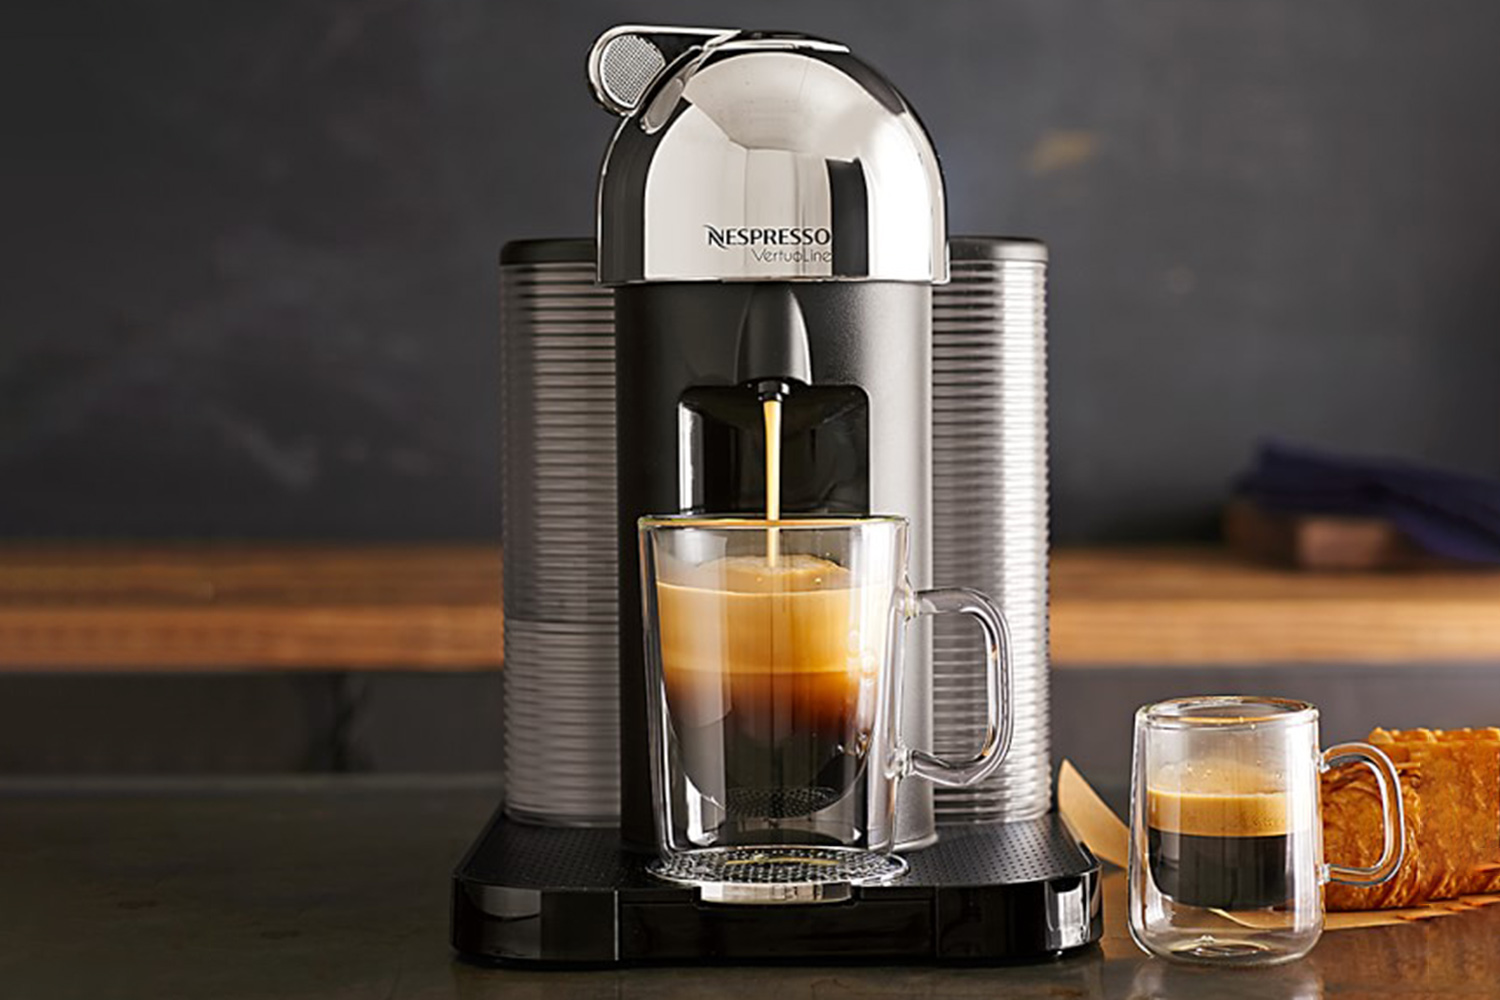 https://www.themanual.com/wp-content/uploads/sites/9/2021/10/nespresso-vertuoline-espresso-and-coffee-maker.jpg?fit=800%2C800&p=1